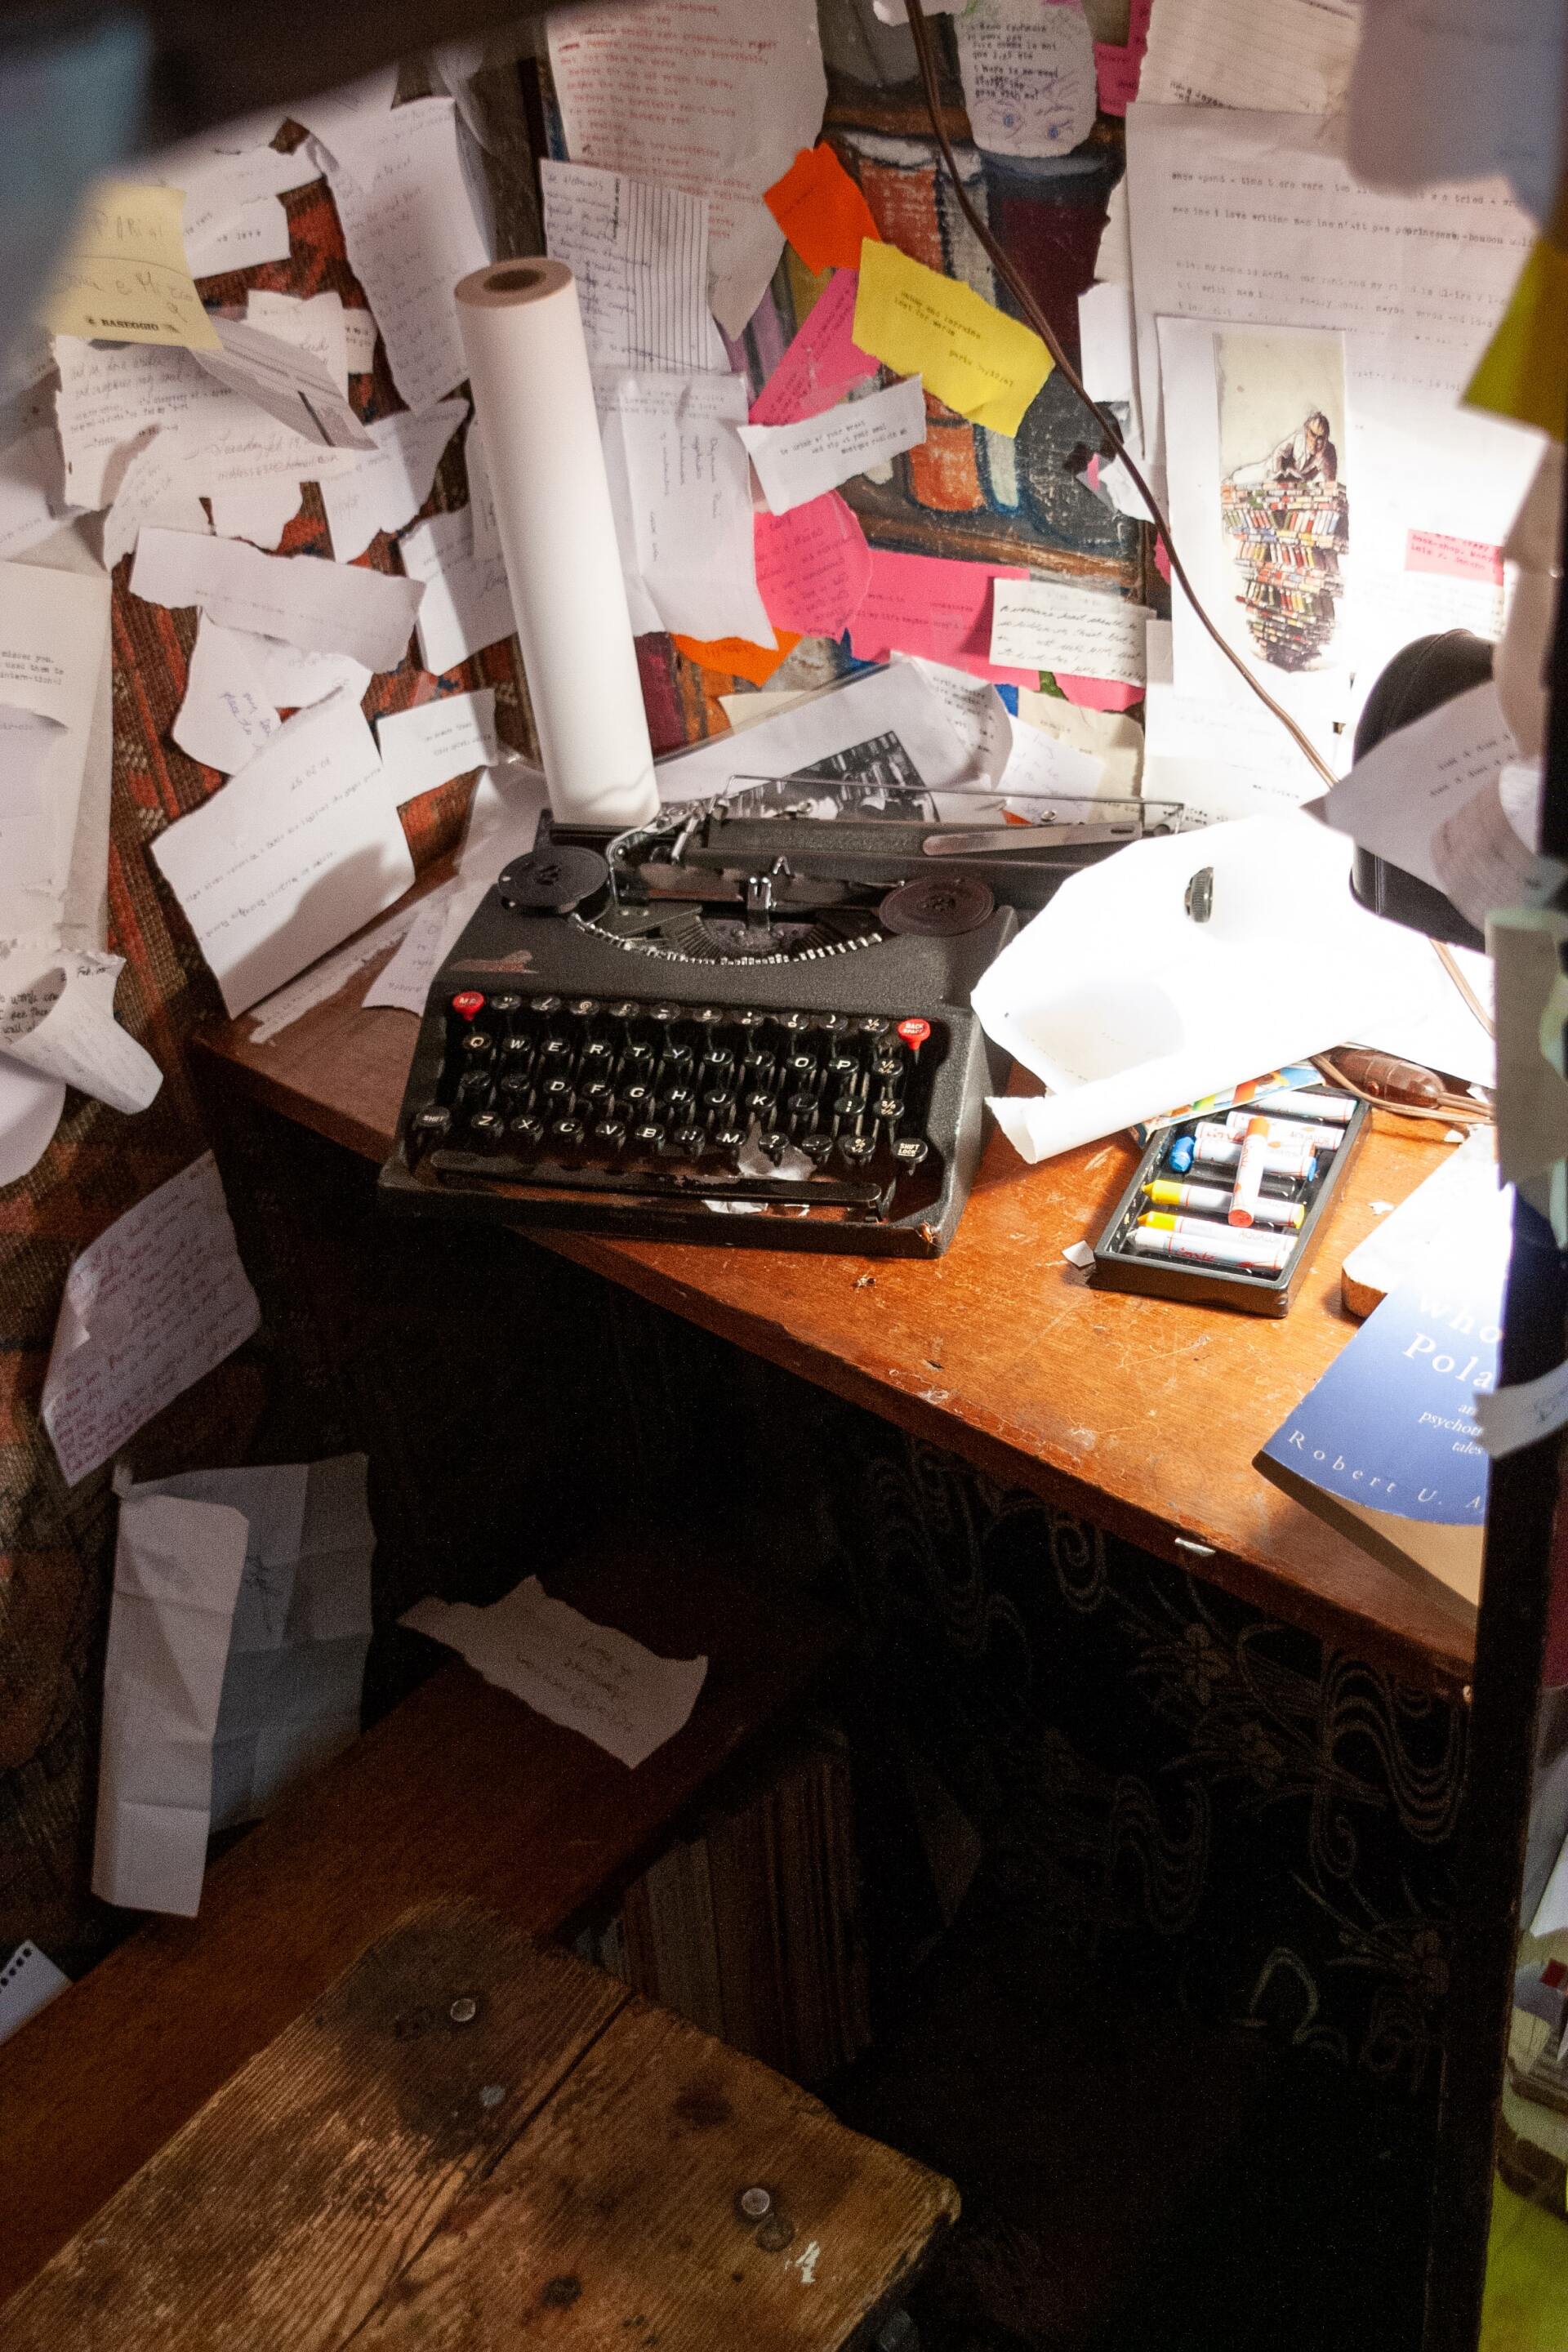 Writers block and disorganized first draft